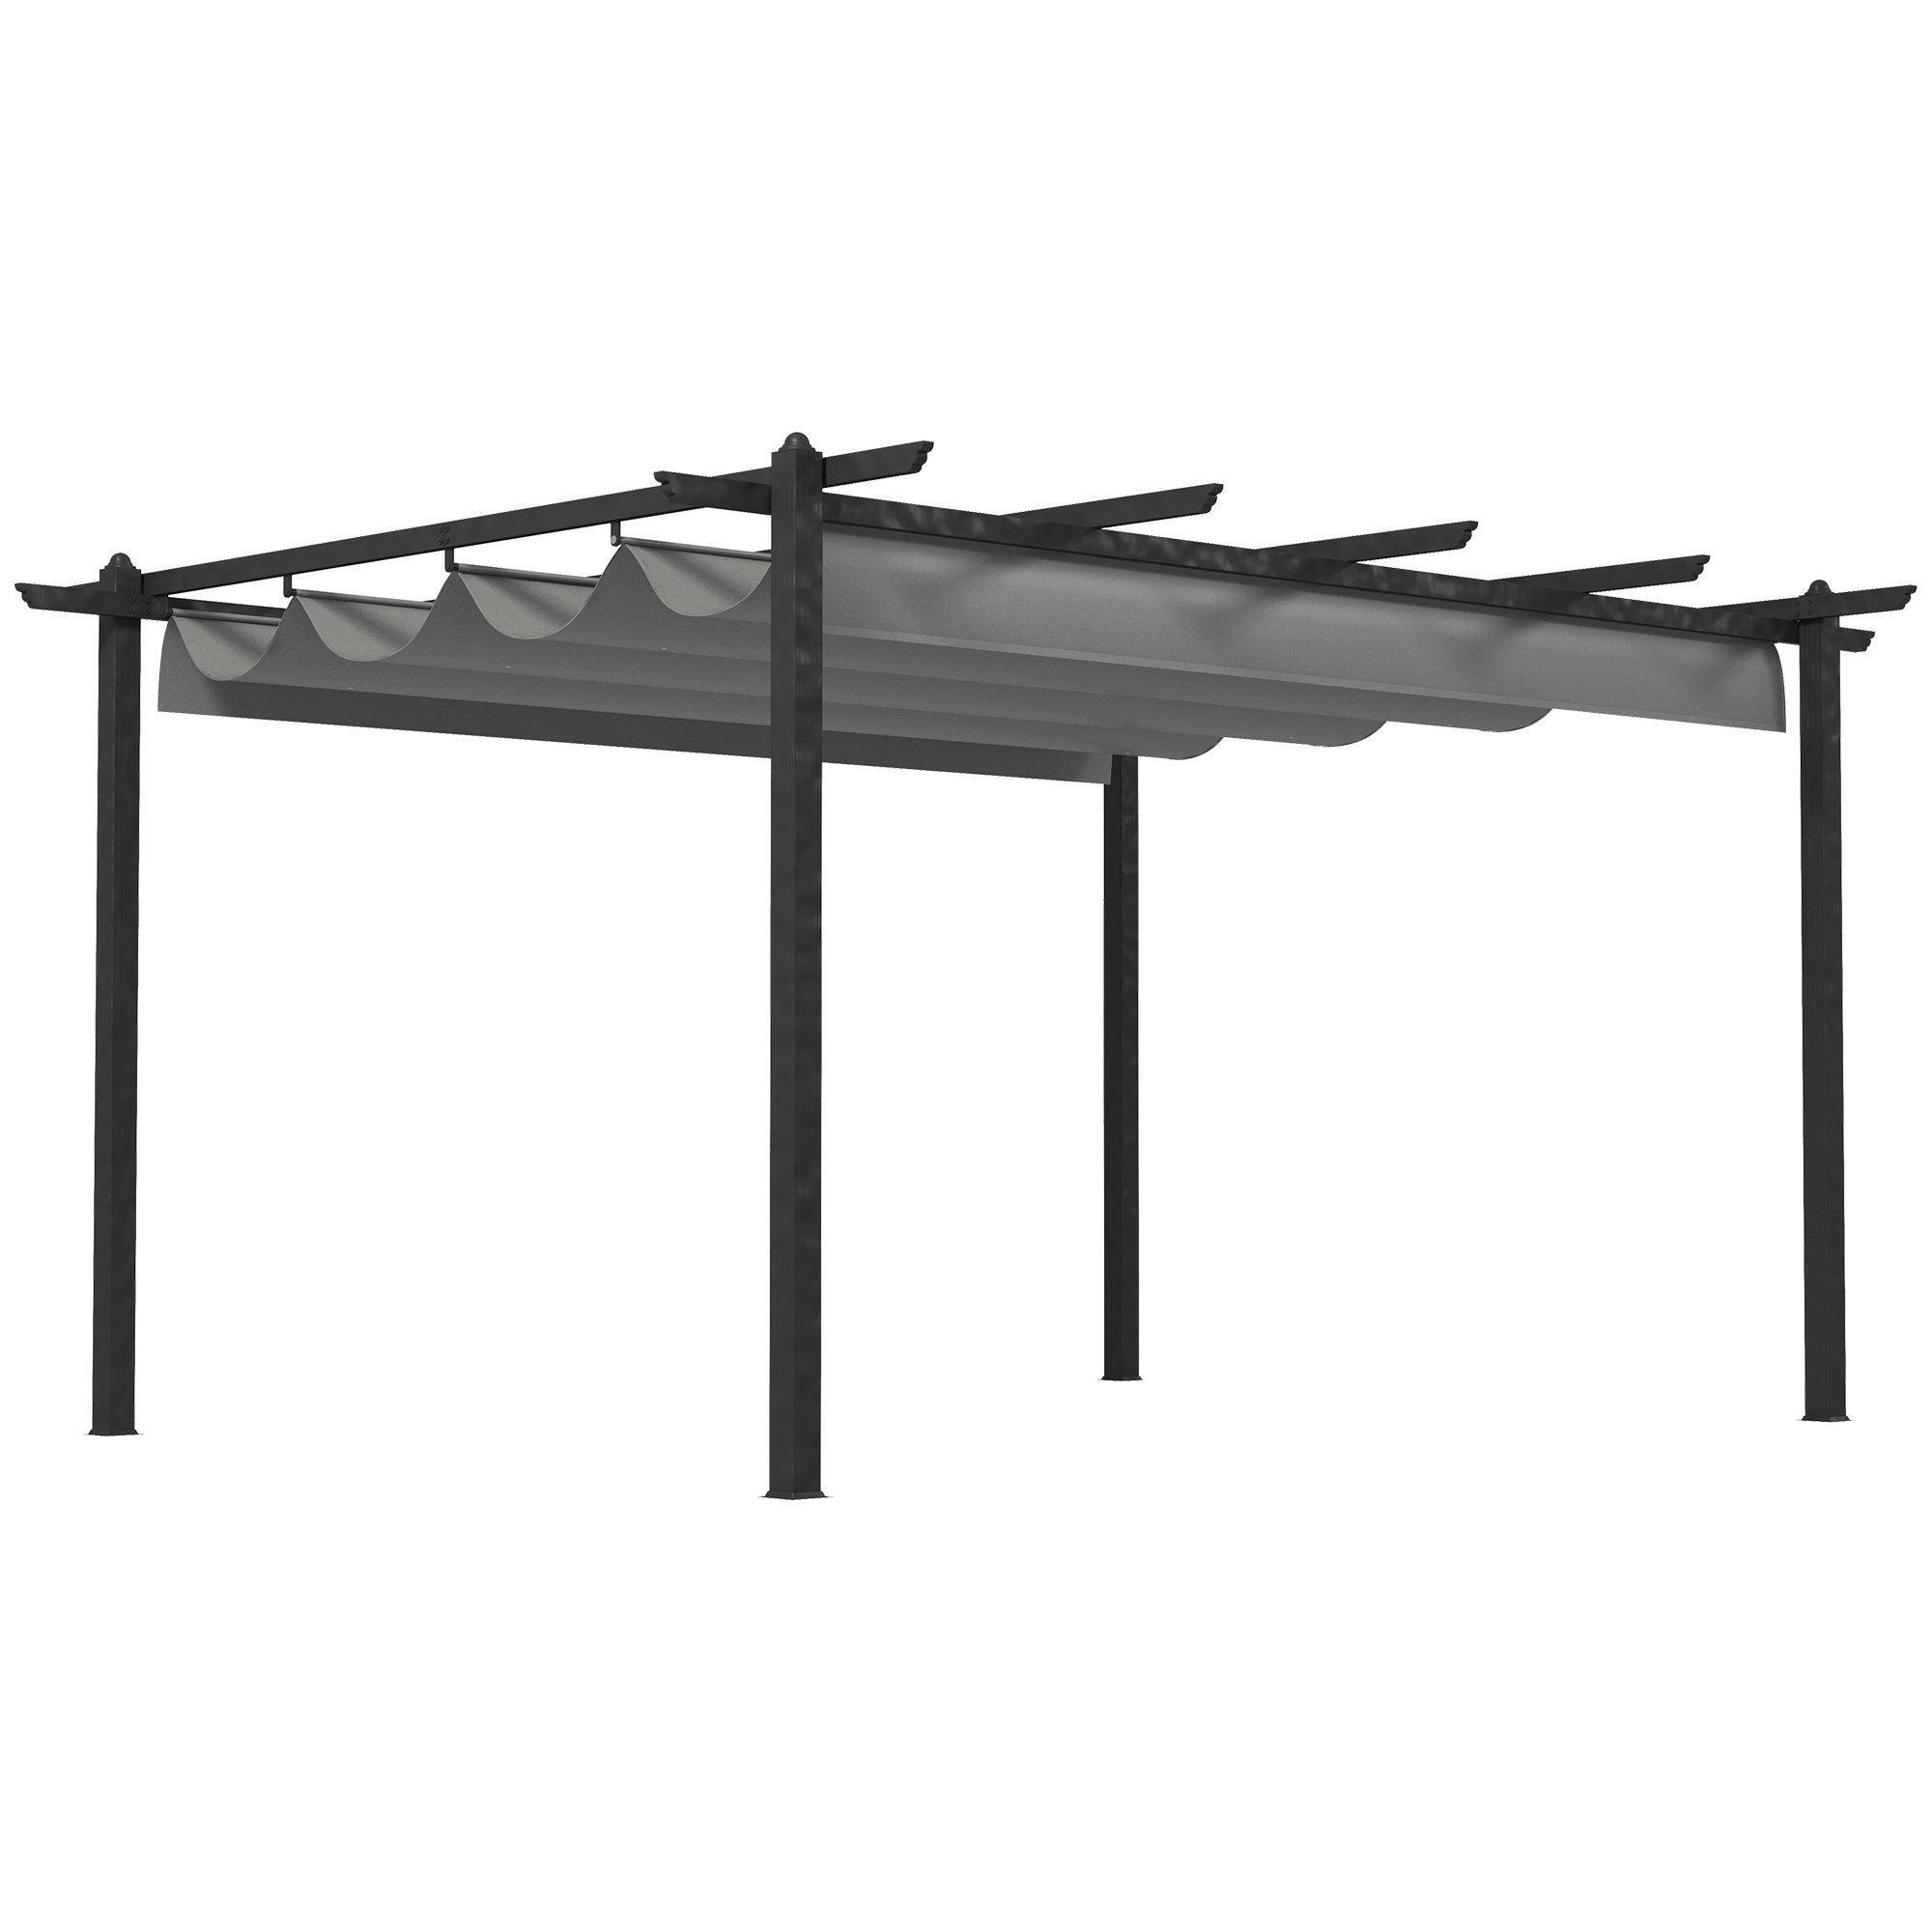 4 x 3(m) Aluminium Pergola Garden Gazebo with Retractable Canopy - image 1